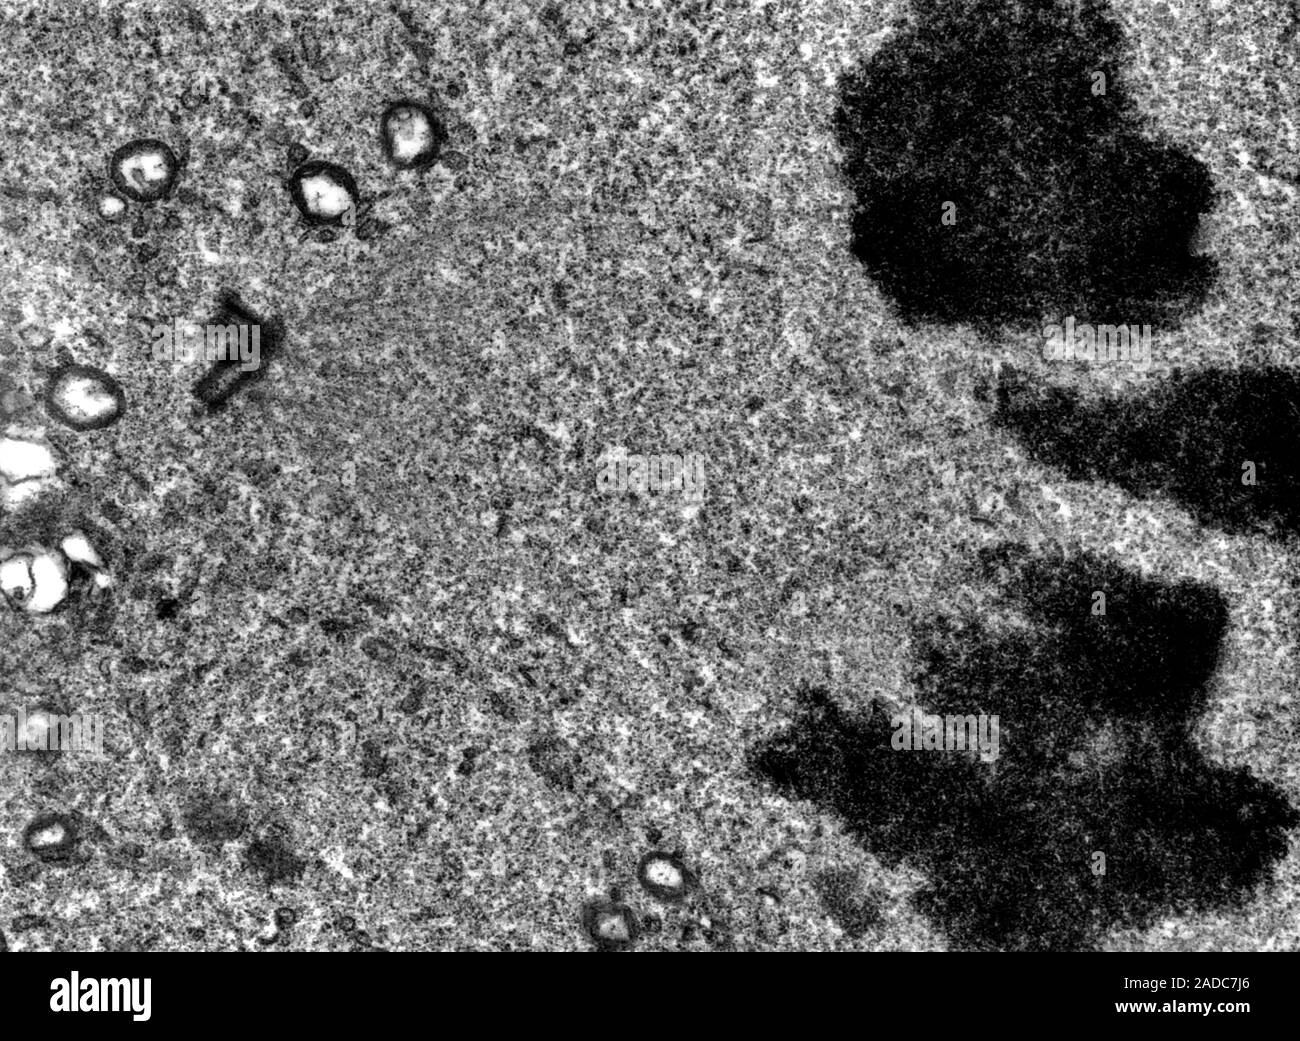 Transmission electron micrograph (TEM) showing metaphase of mitosis ...